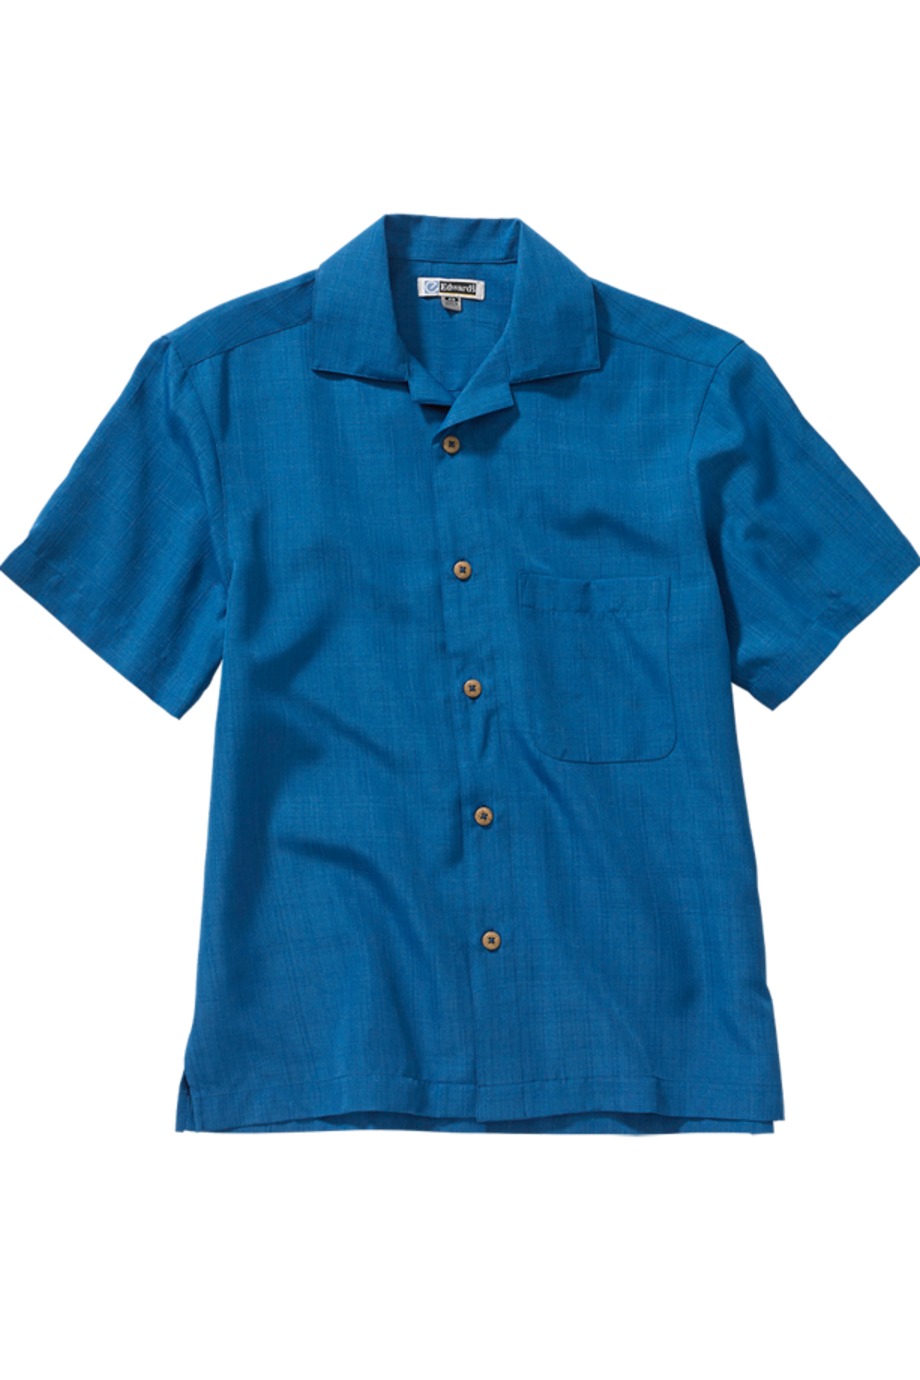 Edwards Garment 1030 - Jacquard Batiste Camp Shirt